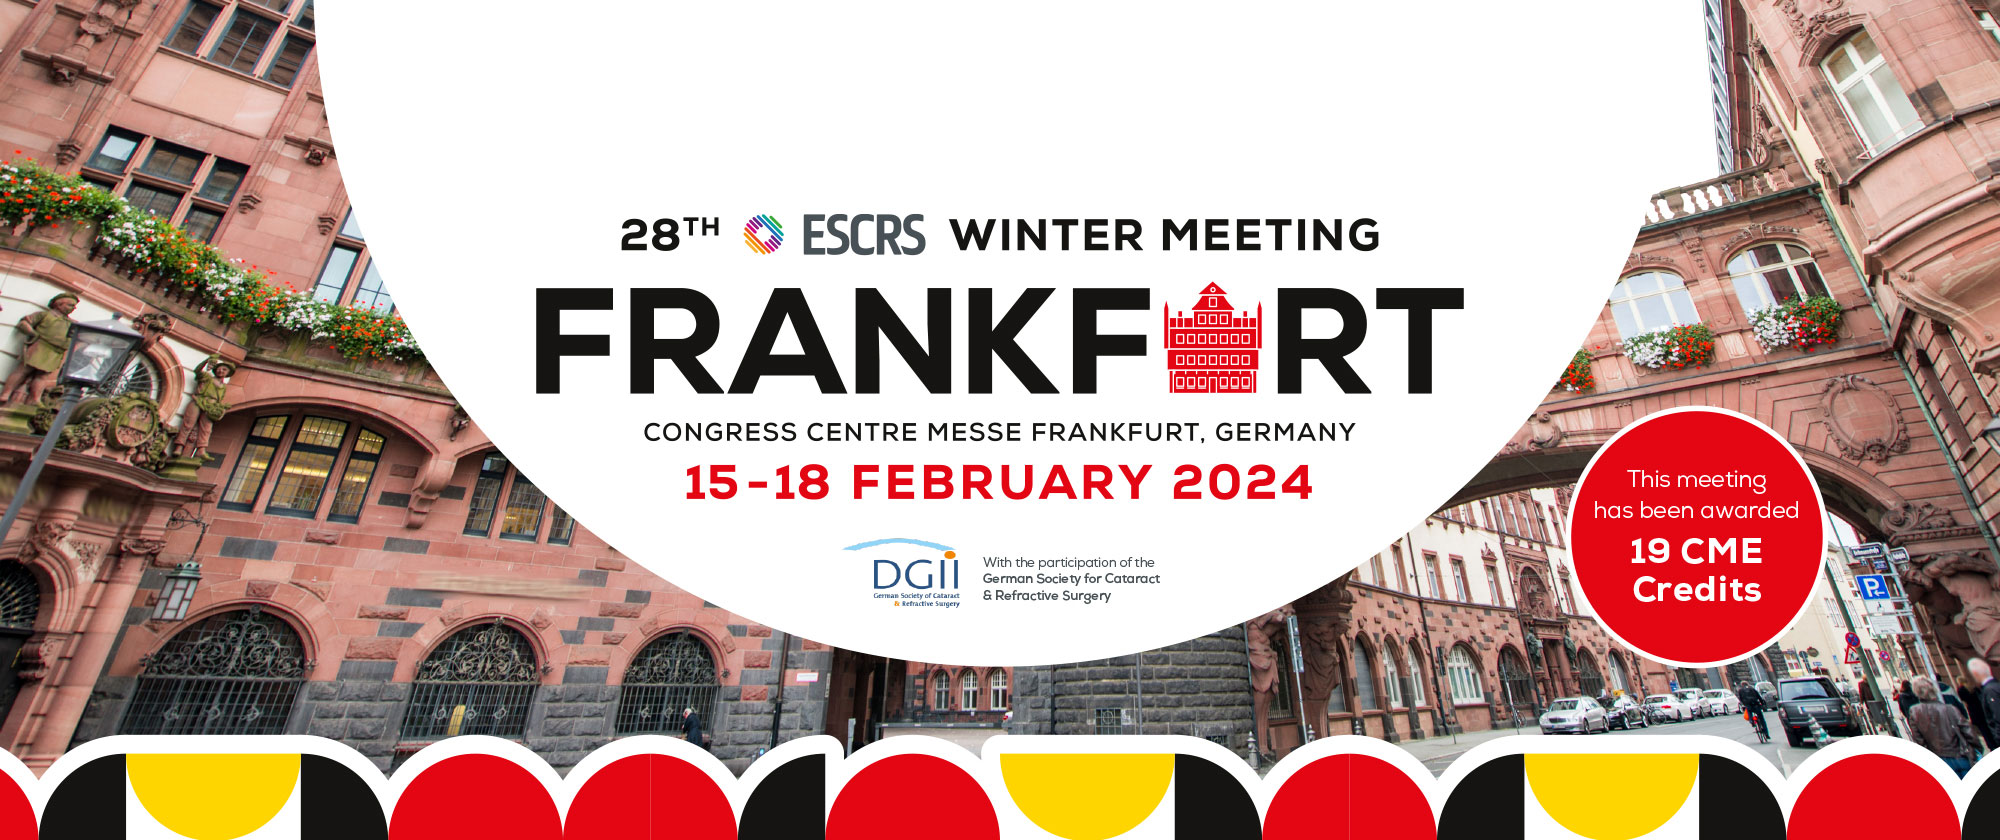 28th ESCRS Winter Meeting Congress Centre Messe Frankfurt, Germany 15-18 February 2024